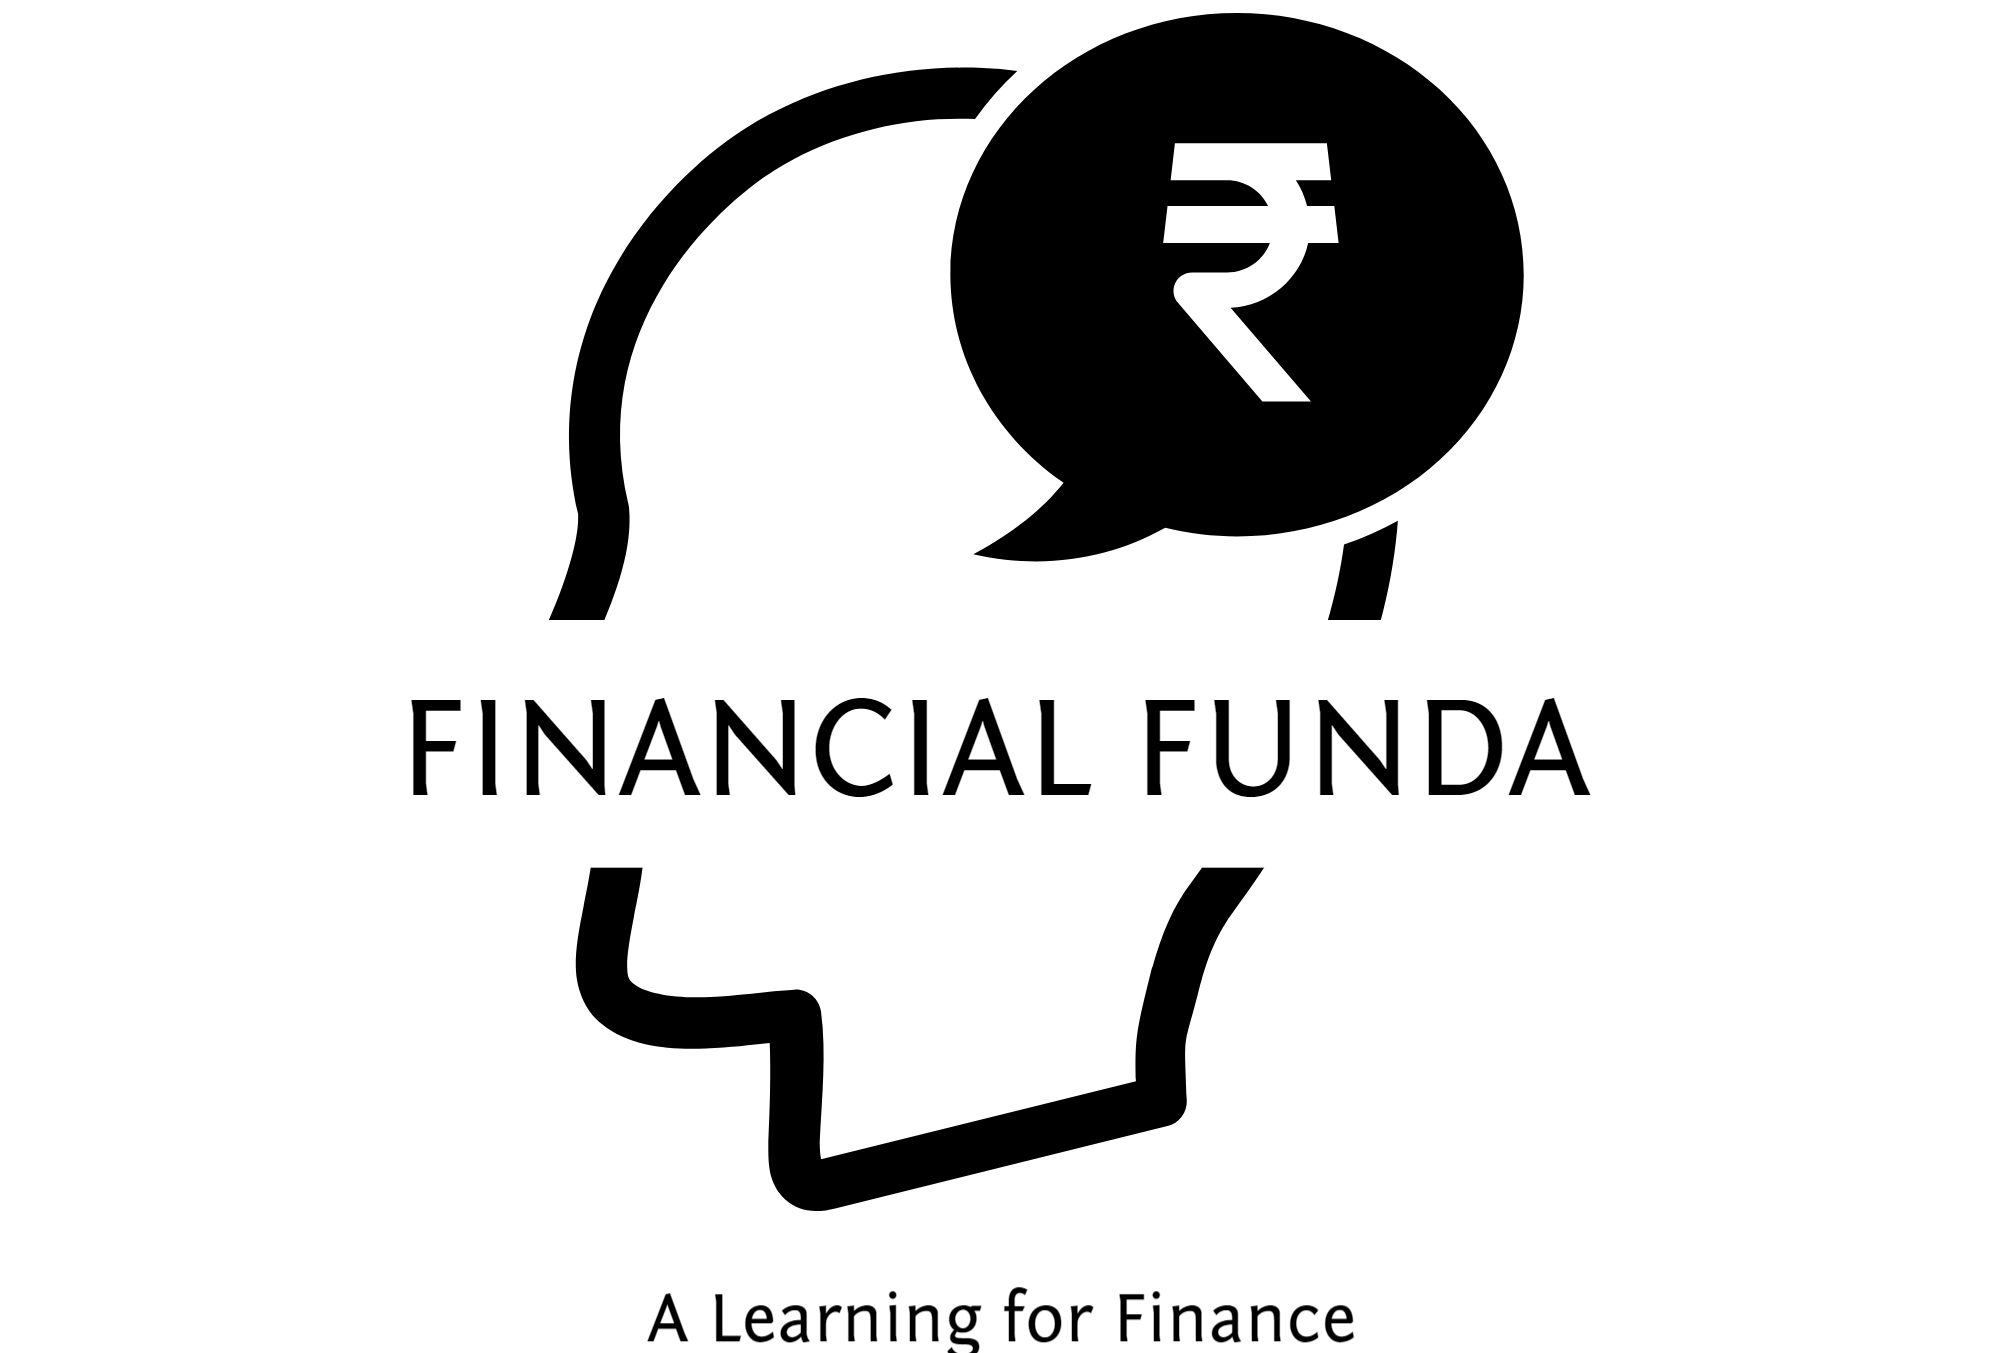 Financial Funda